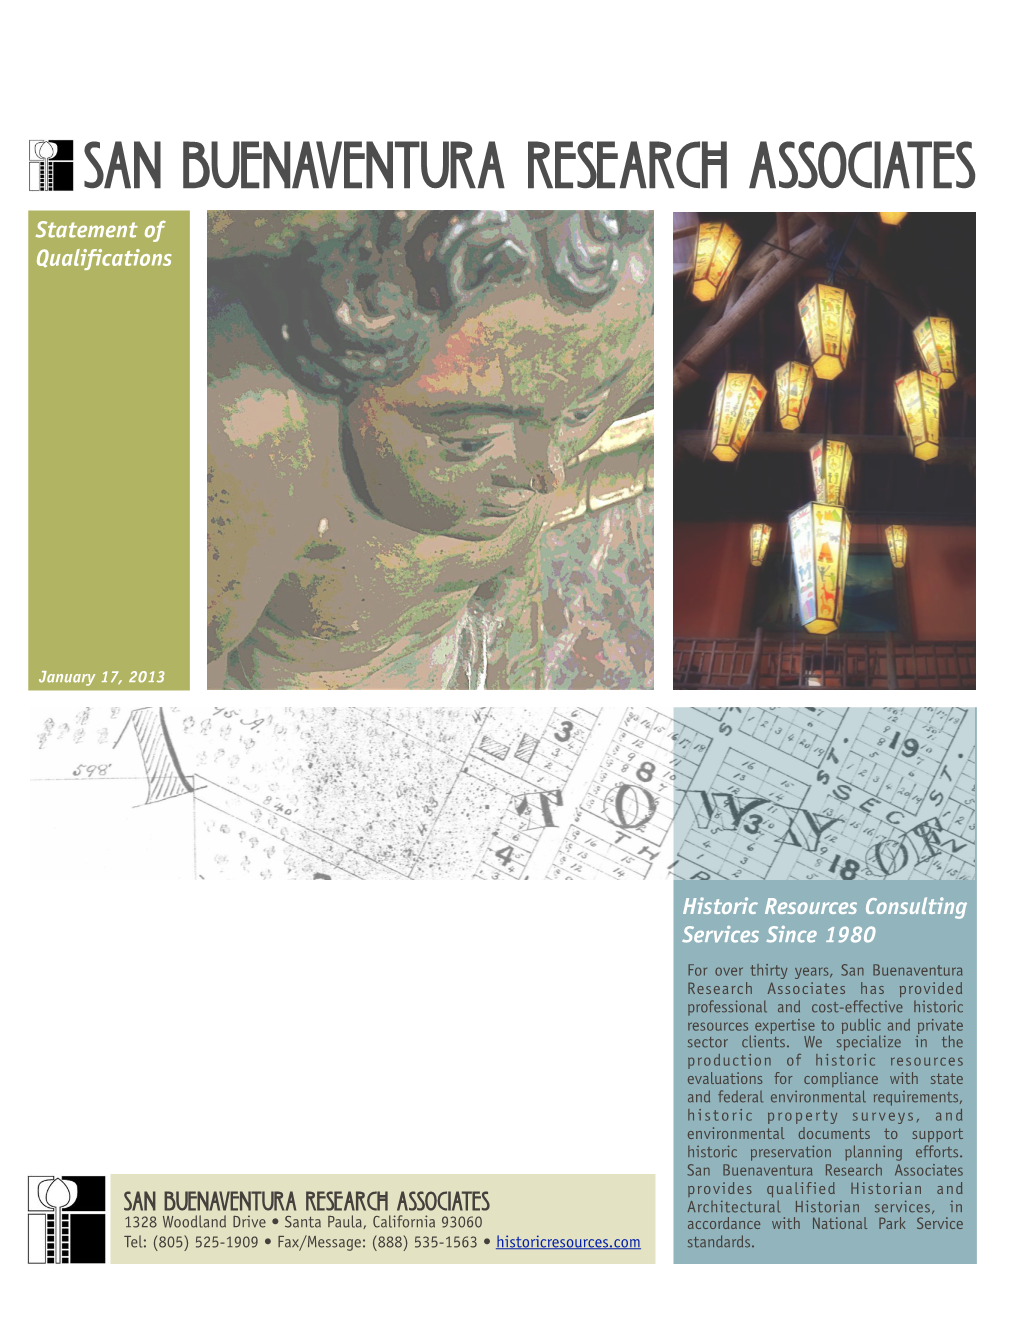 SAN BUENAVENTURA RESEARCH ASSOCIATES Statement of Qualifications